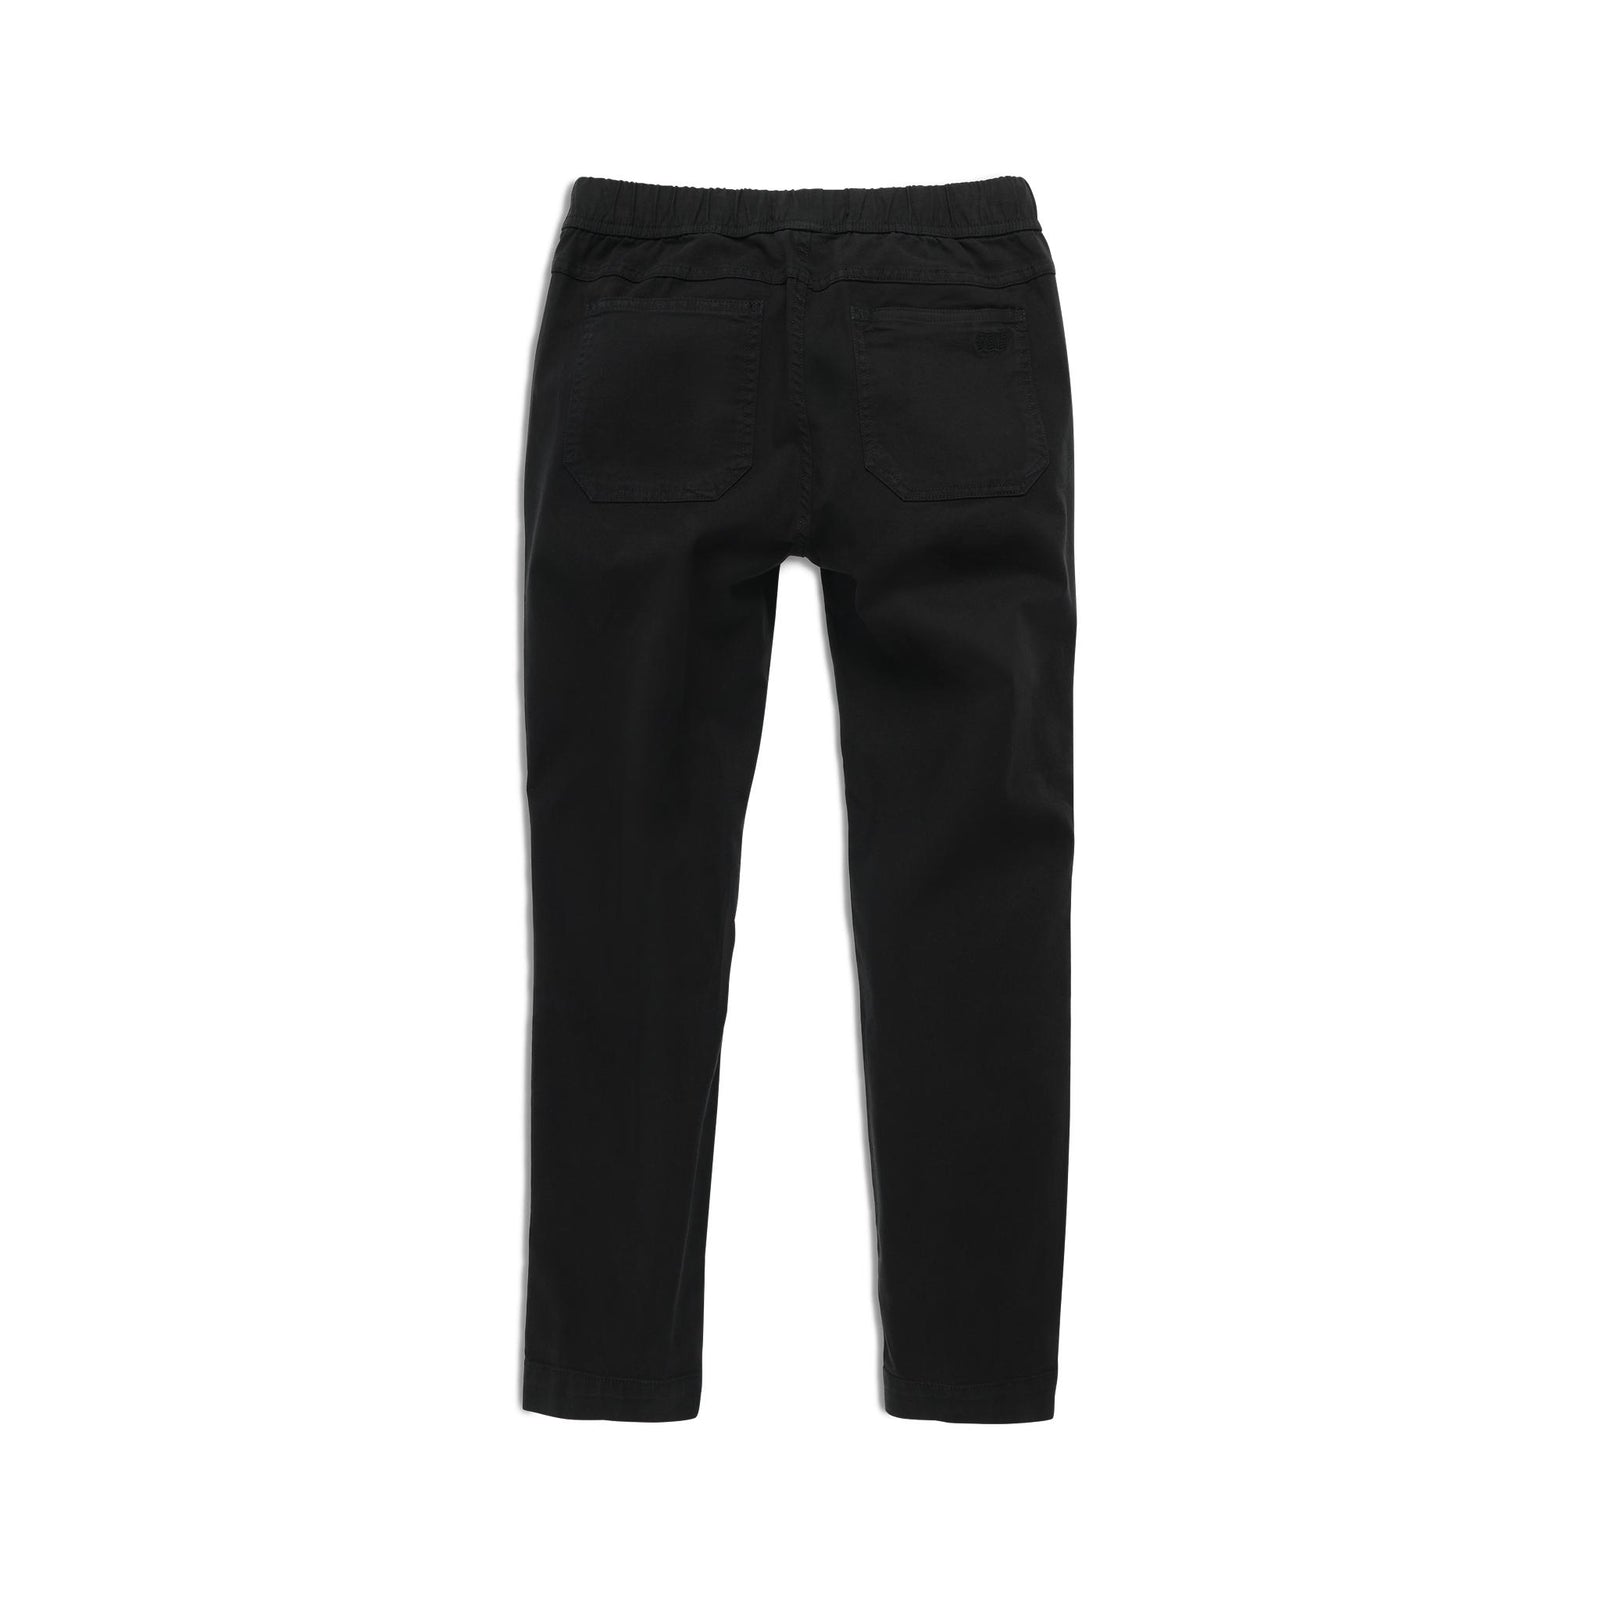 Back View of Topo Designs Dirt Pants Slim - Women's in "Black"